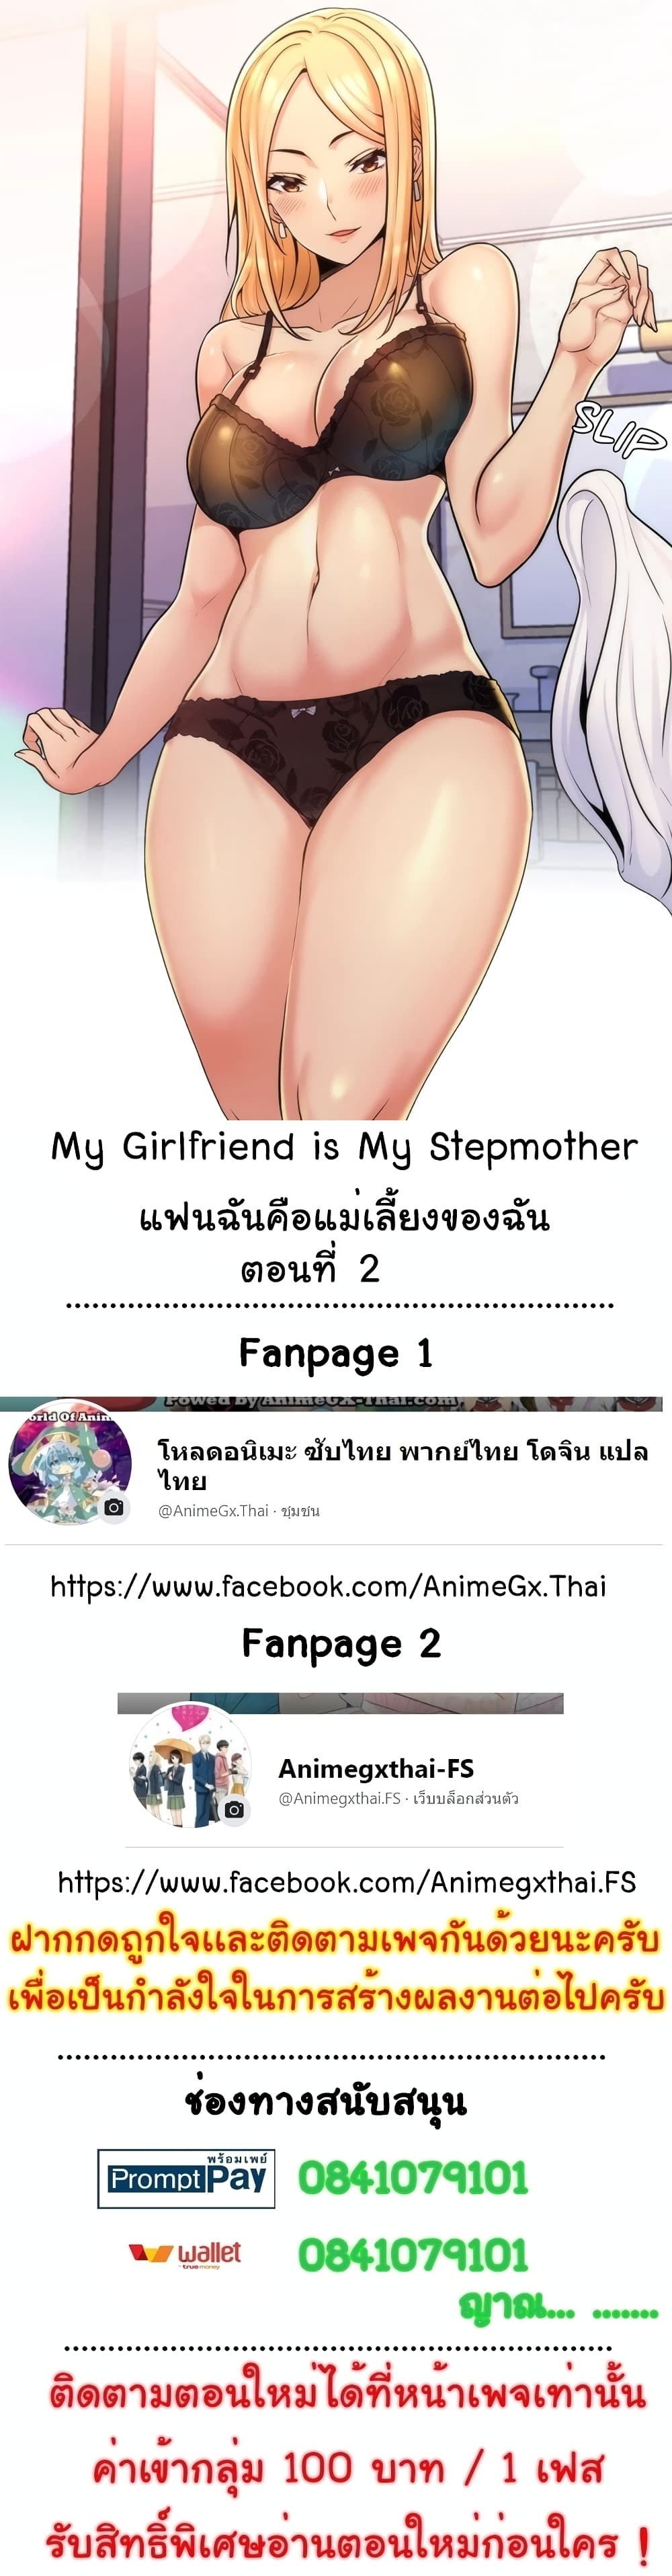 My Girlfriend is My Stepmother2 (1)